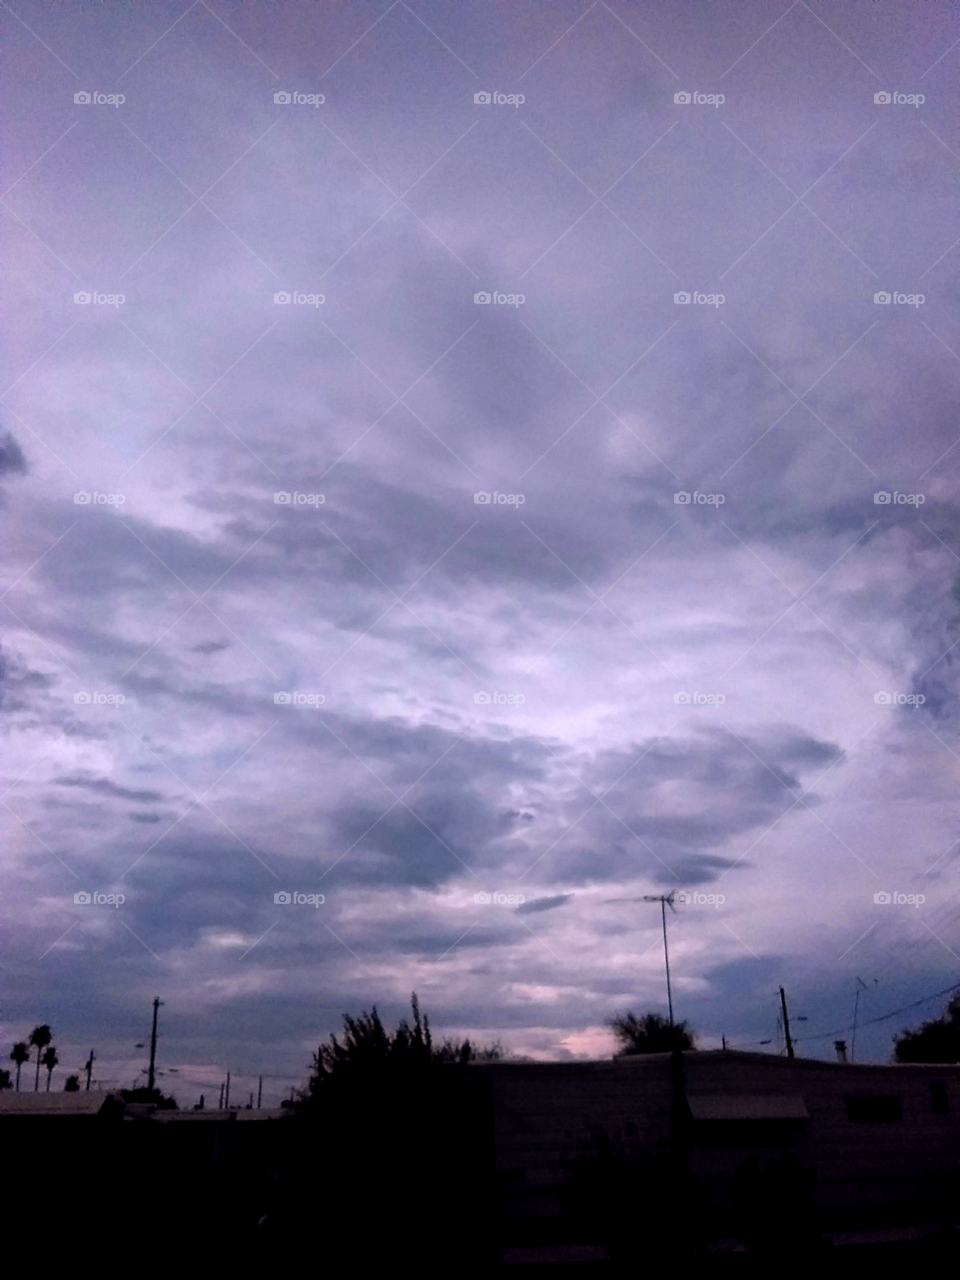 Monsoon clouds in Arizona